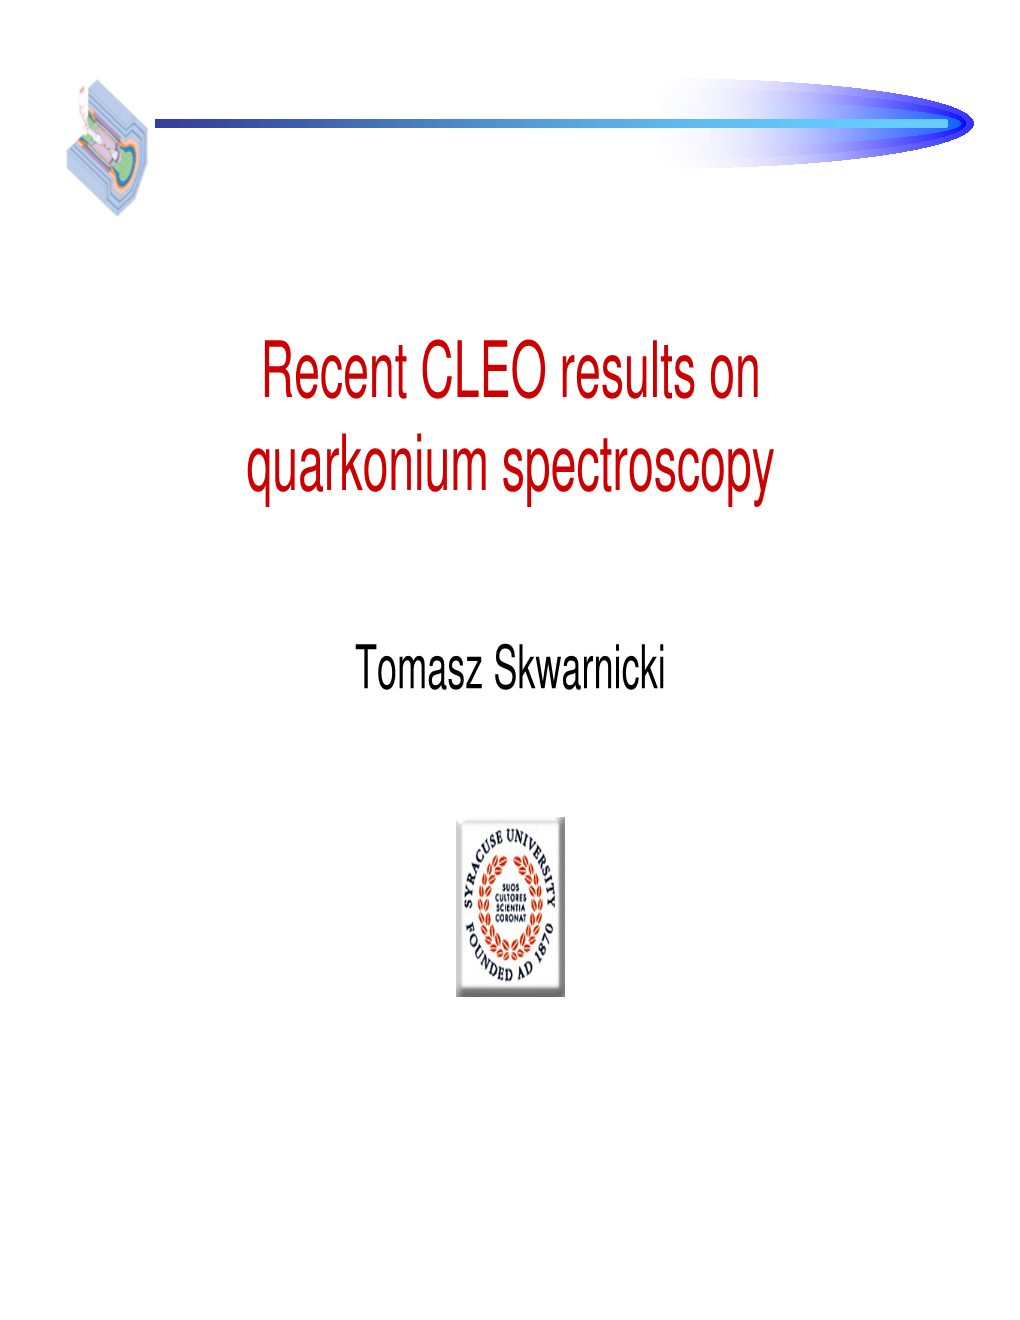 Recent CLEO Results on Quarkonium Spectroscopy